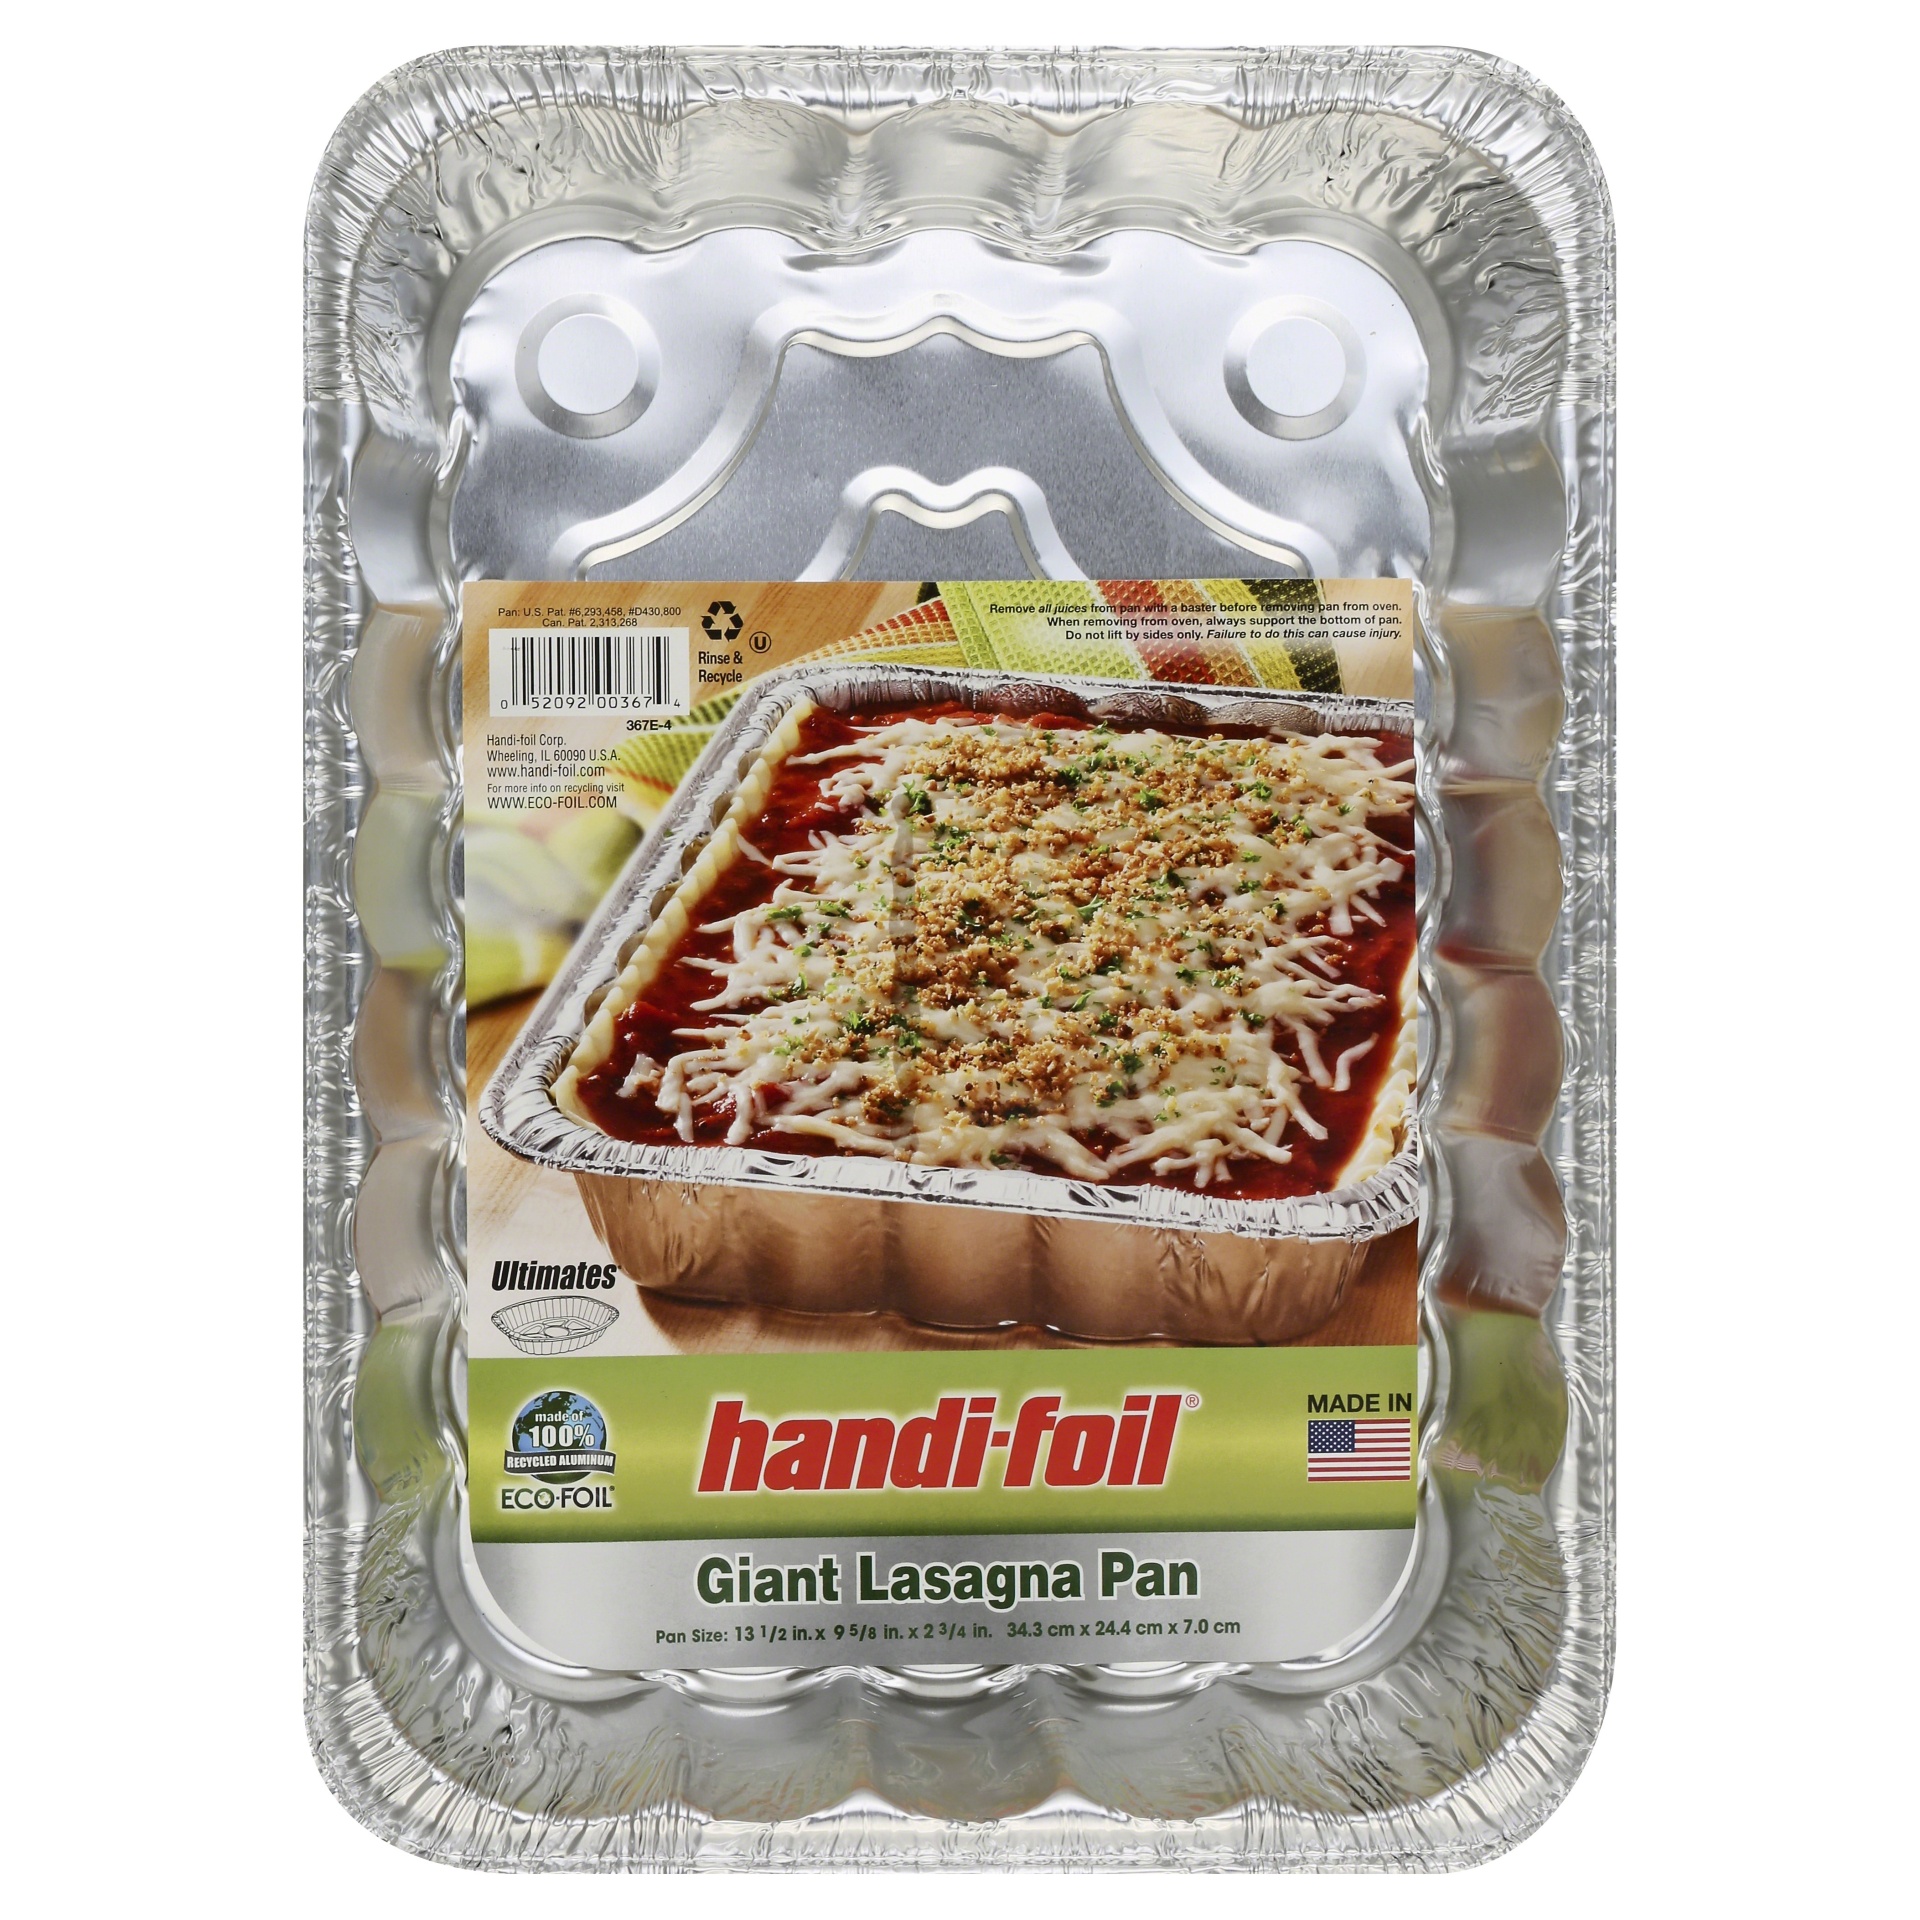 slide 1 of 3, Handi-foil Eco Foil Giant Lasagna Pan, 1 ct